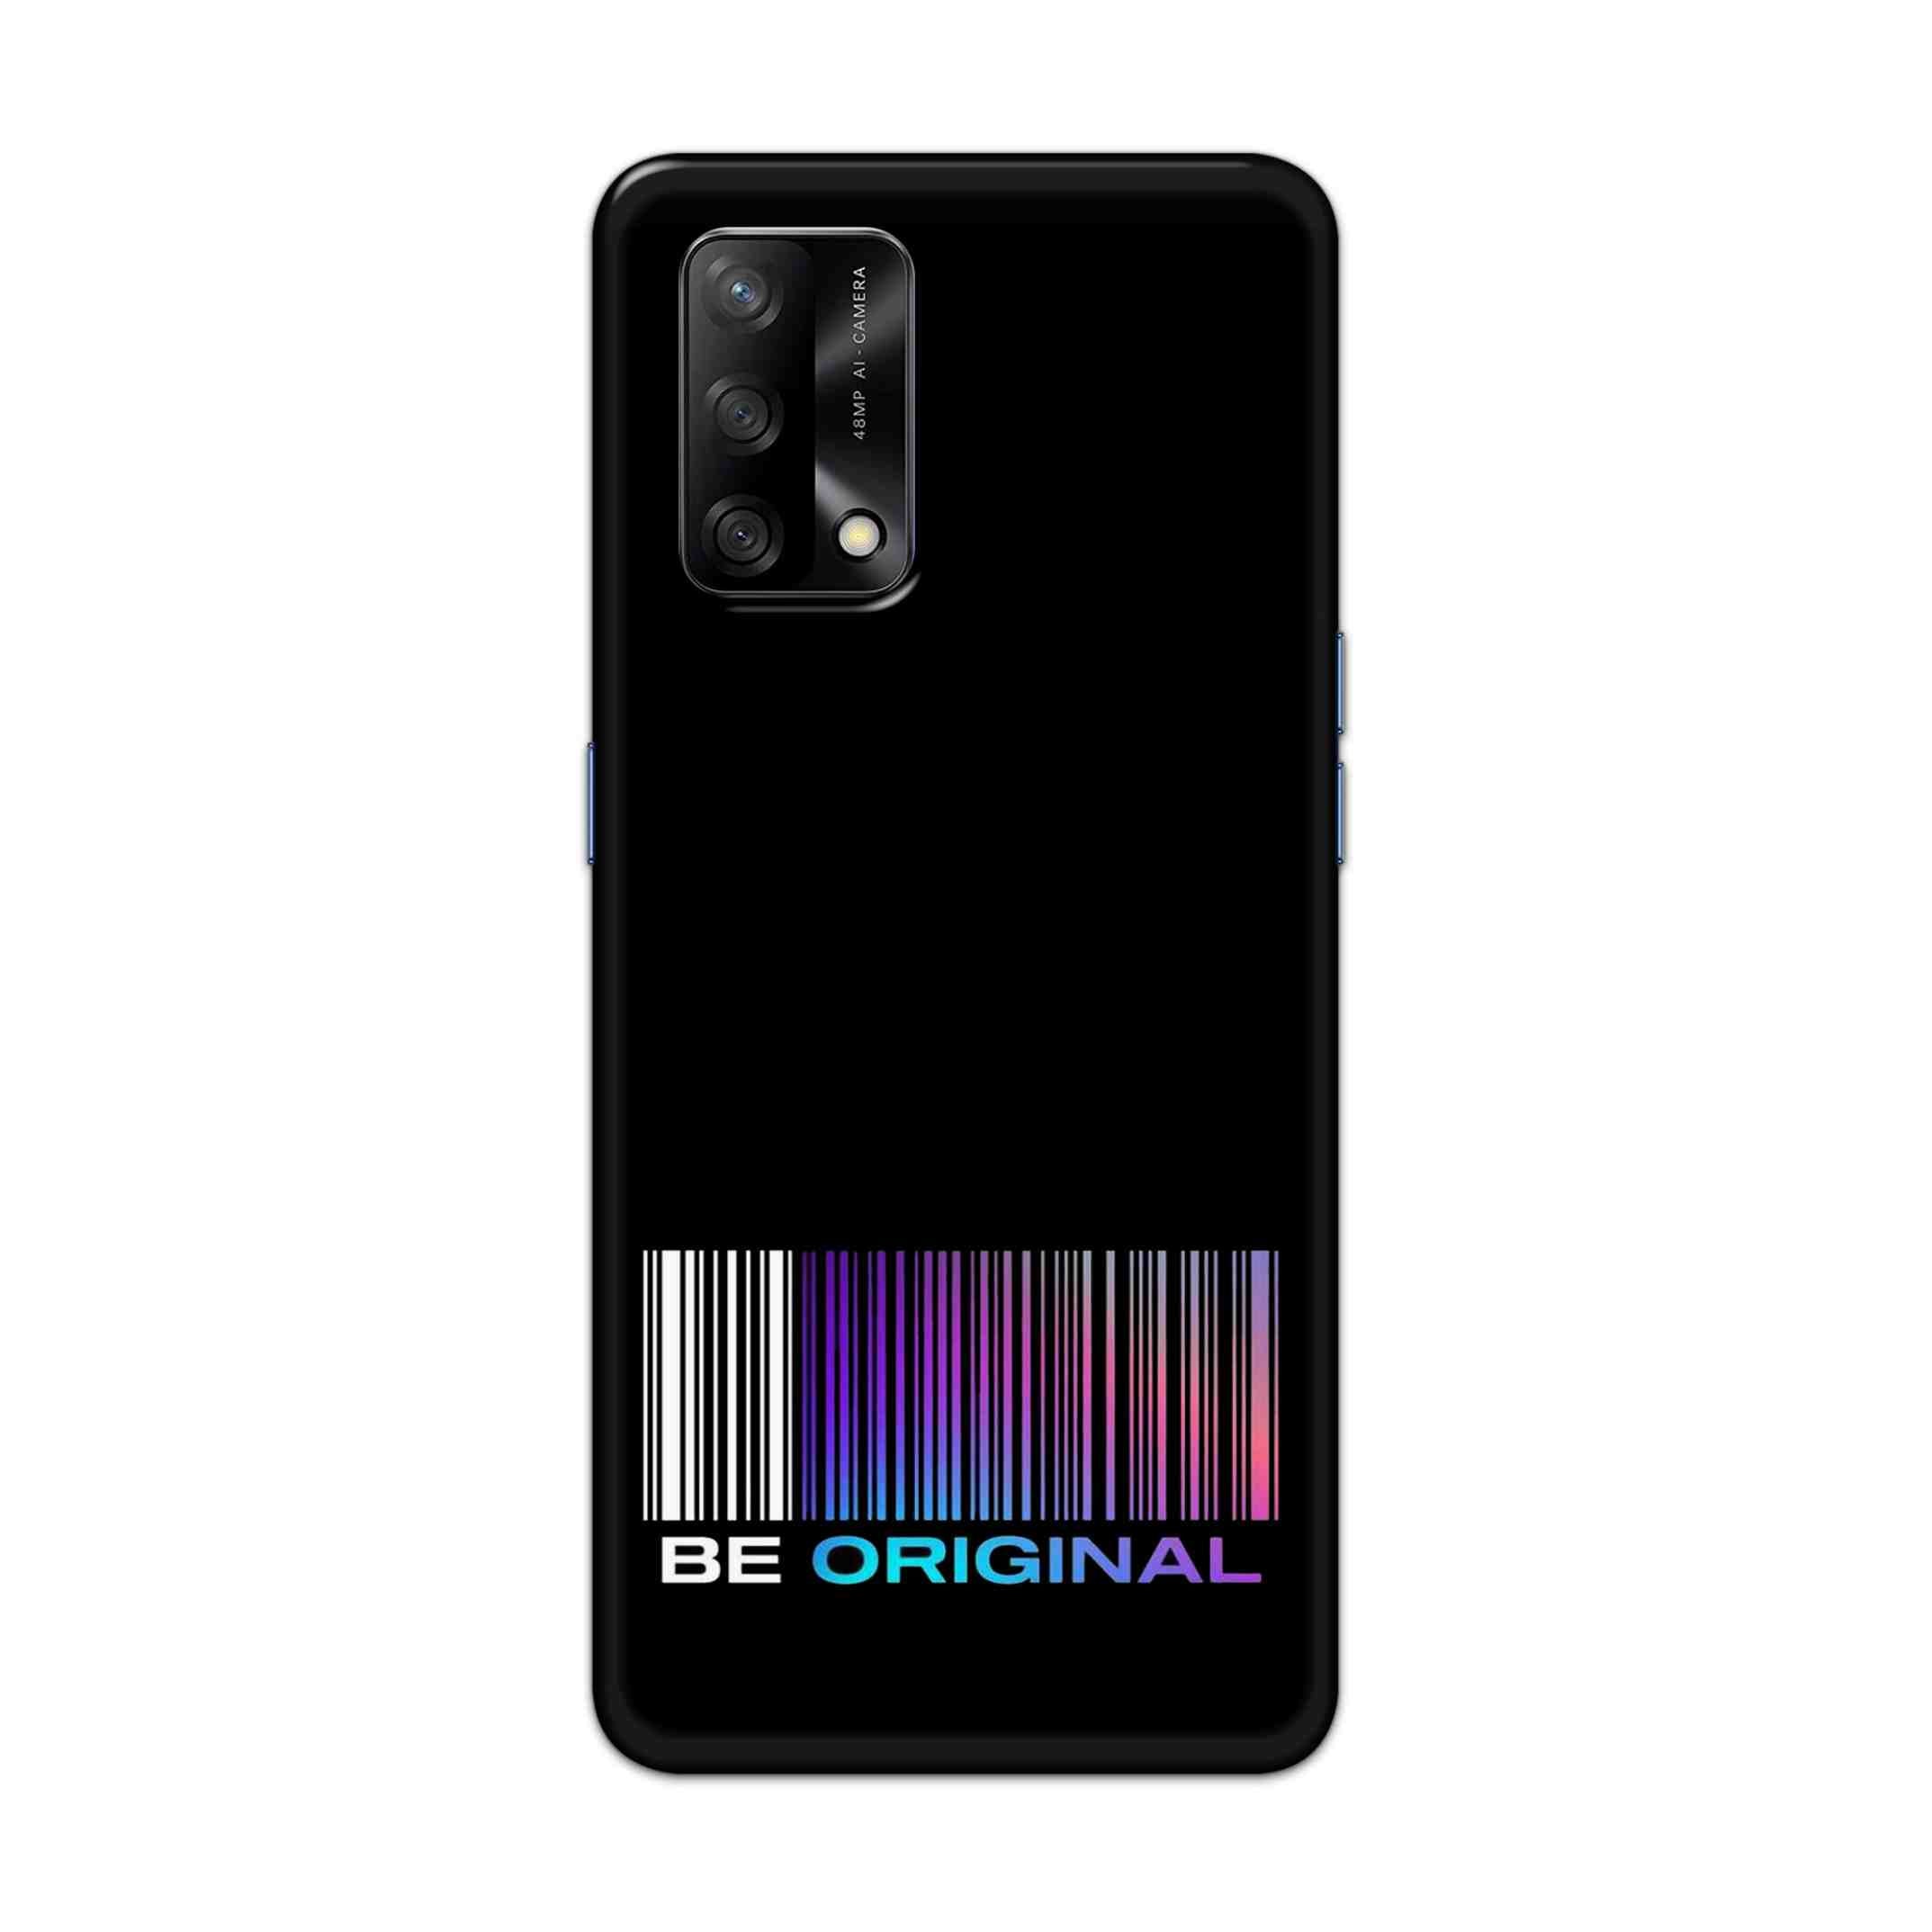 Buy Be Original Hard Back Mobile Phone Case Cover For Oppo F19 Online